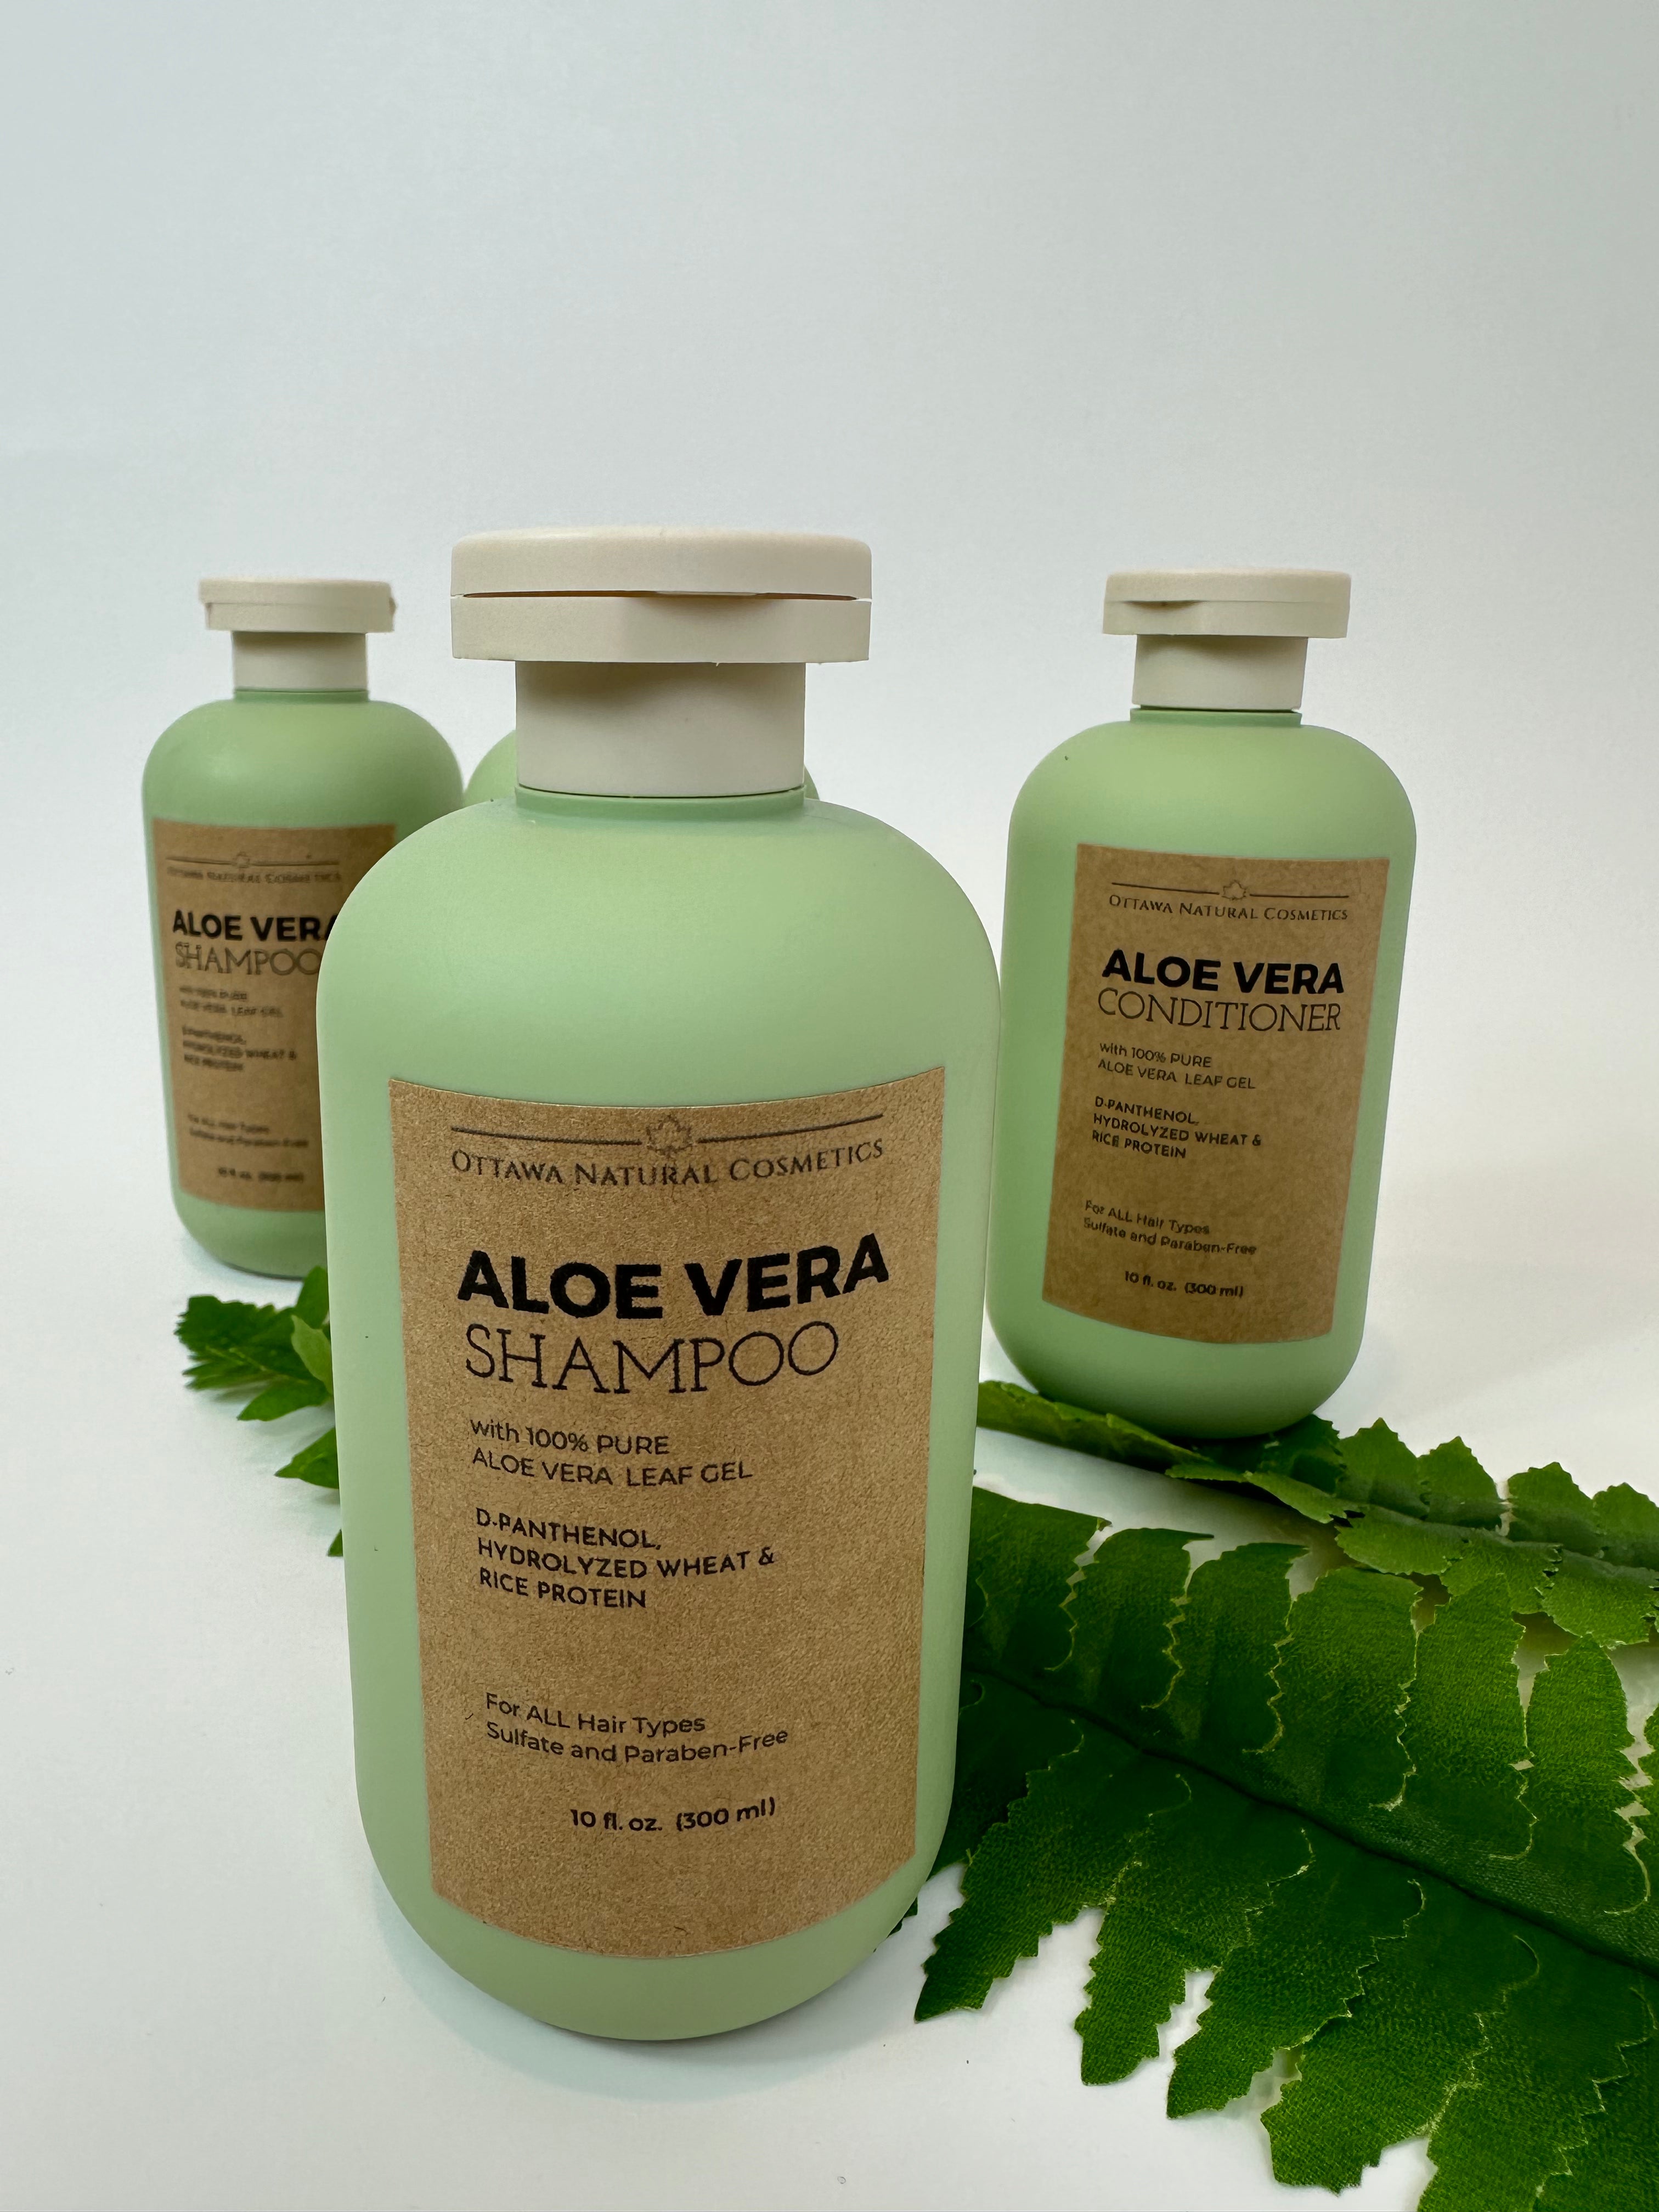 Shampoo  "Aloe Vera "  with 100% Pure Aloe Vera Leaf Gel